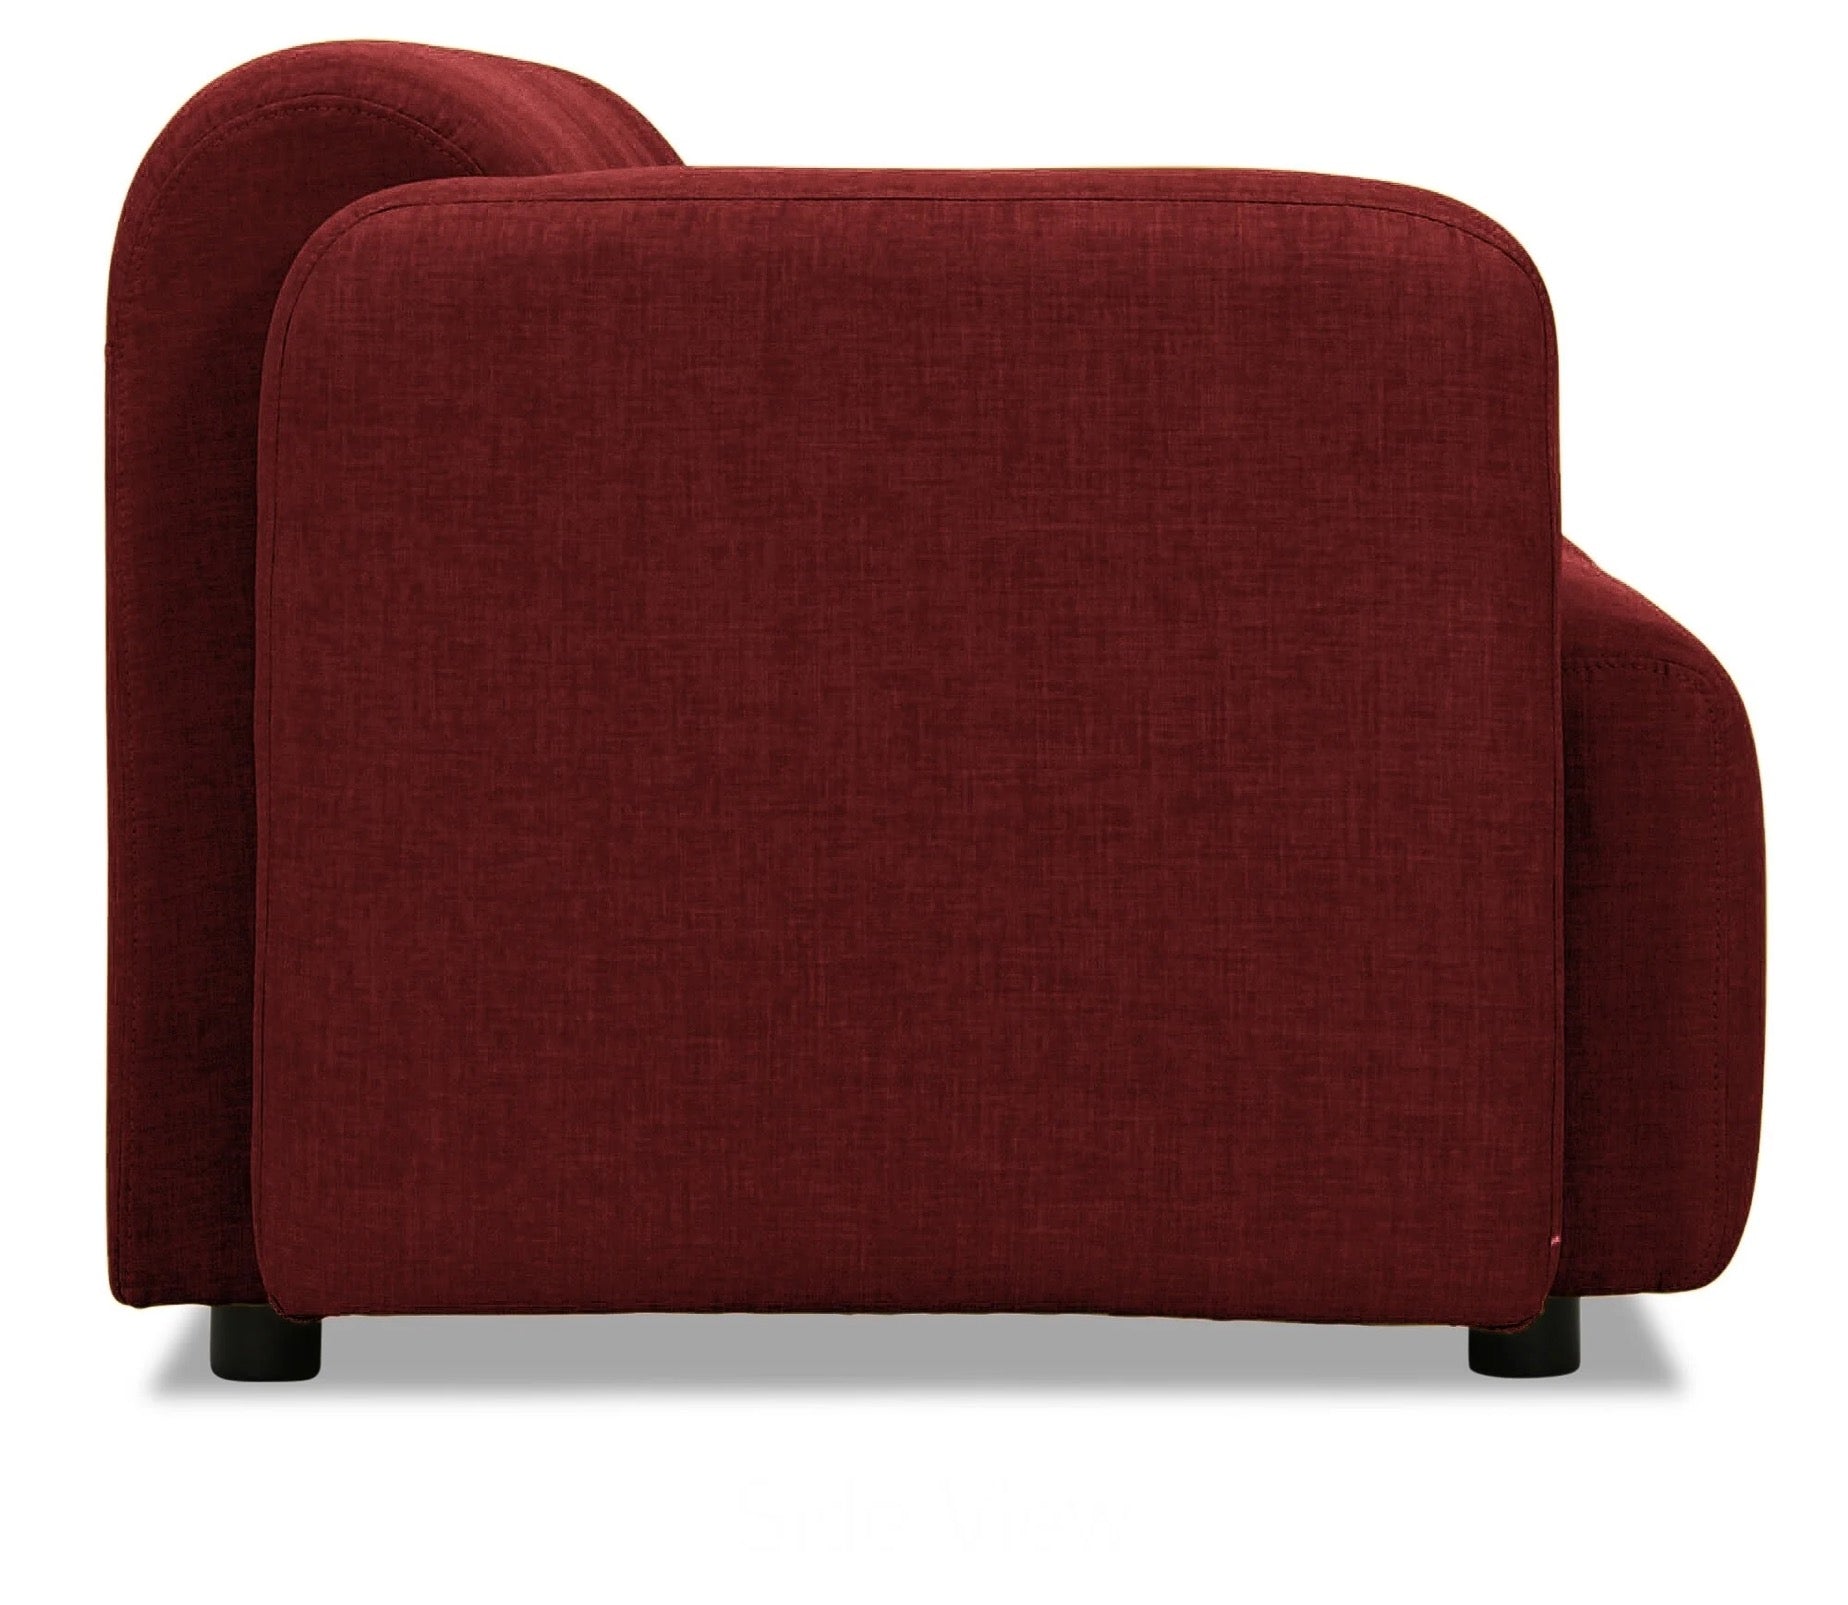 3 Seater Sofa Colorful Claret-Red Fabric Sofa Modular Livingroom Nordic Upholstery Sofas